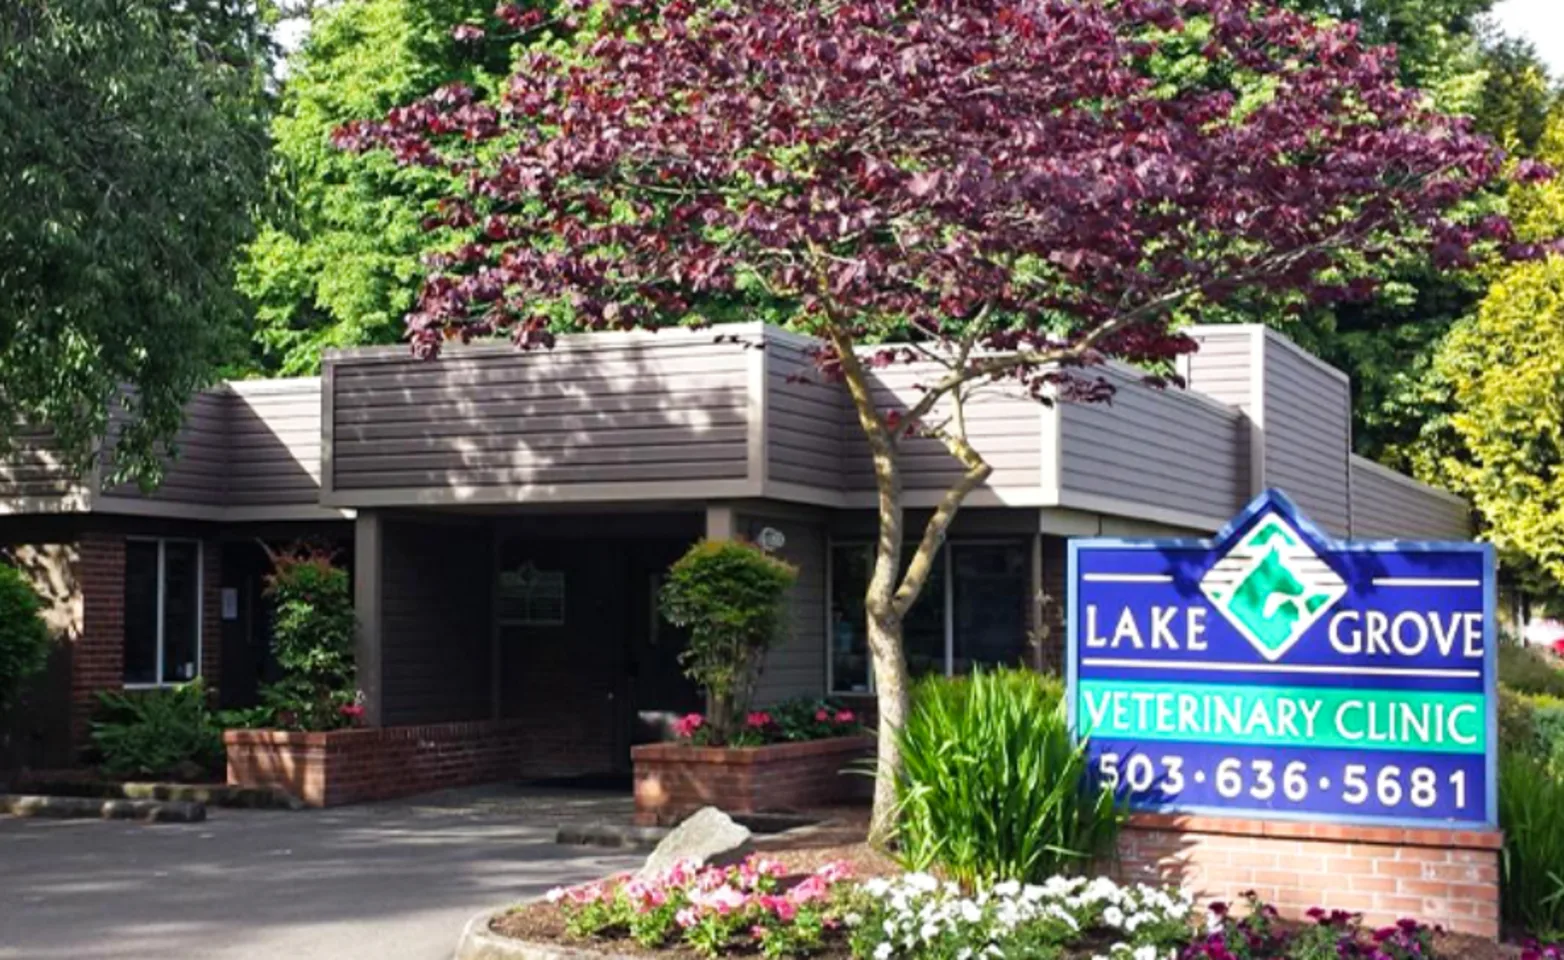 Exterior of Lake Grove Veterinary Clinic